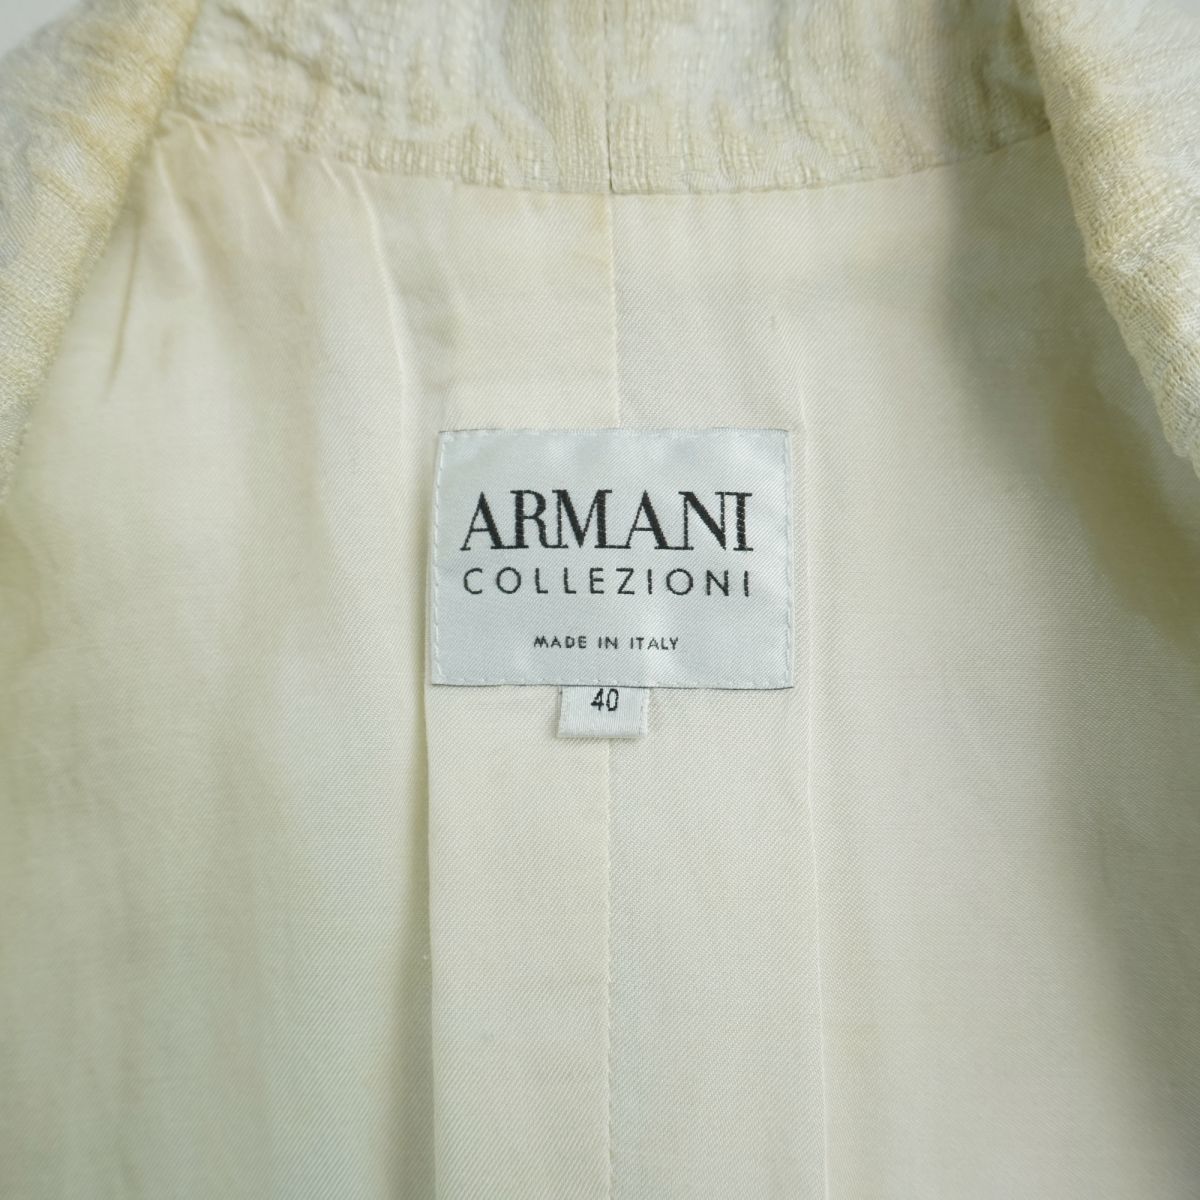 ARMANI COLLEZIONI Armani koretso-ni Jaguar do выставить короткий рукав жакет оборка юбка женский бежевый размер 40,38*MC117